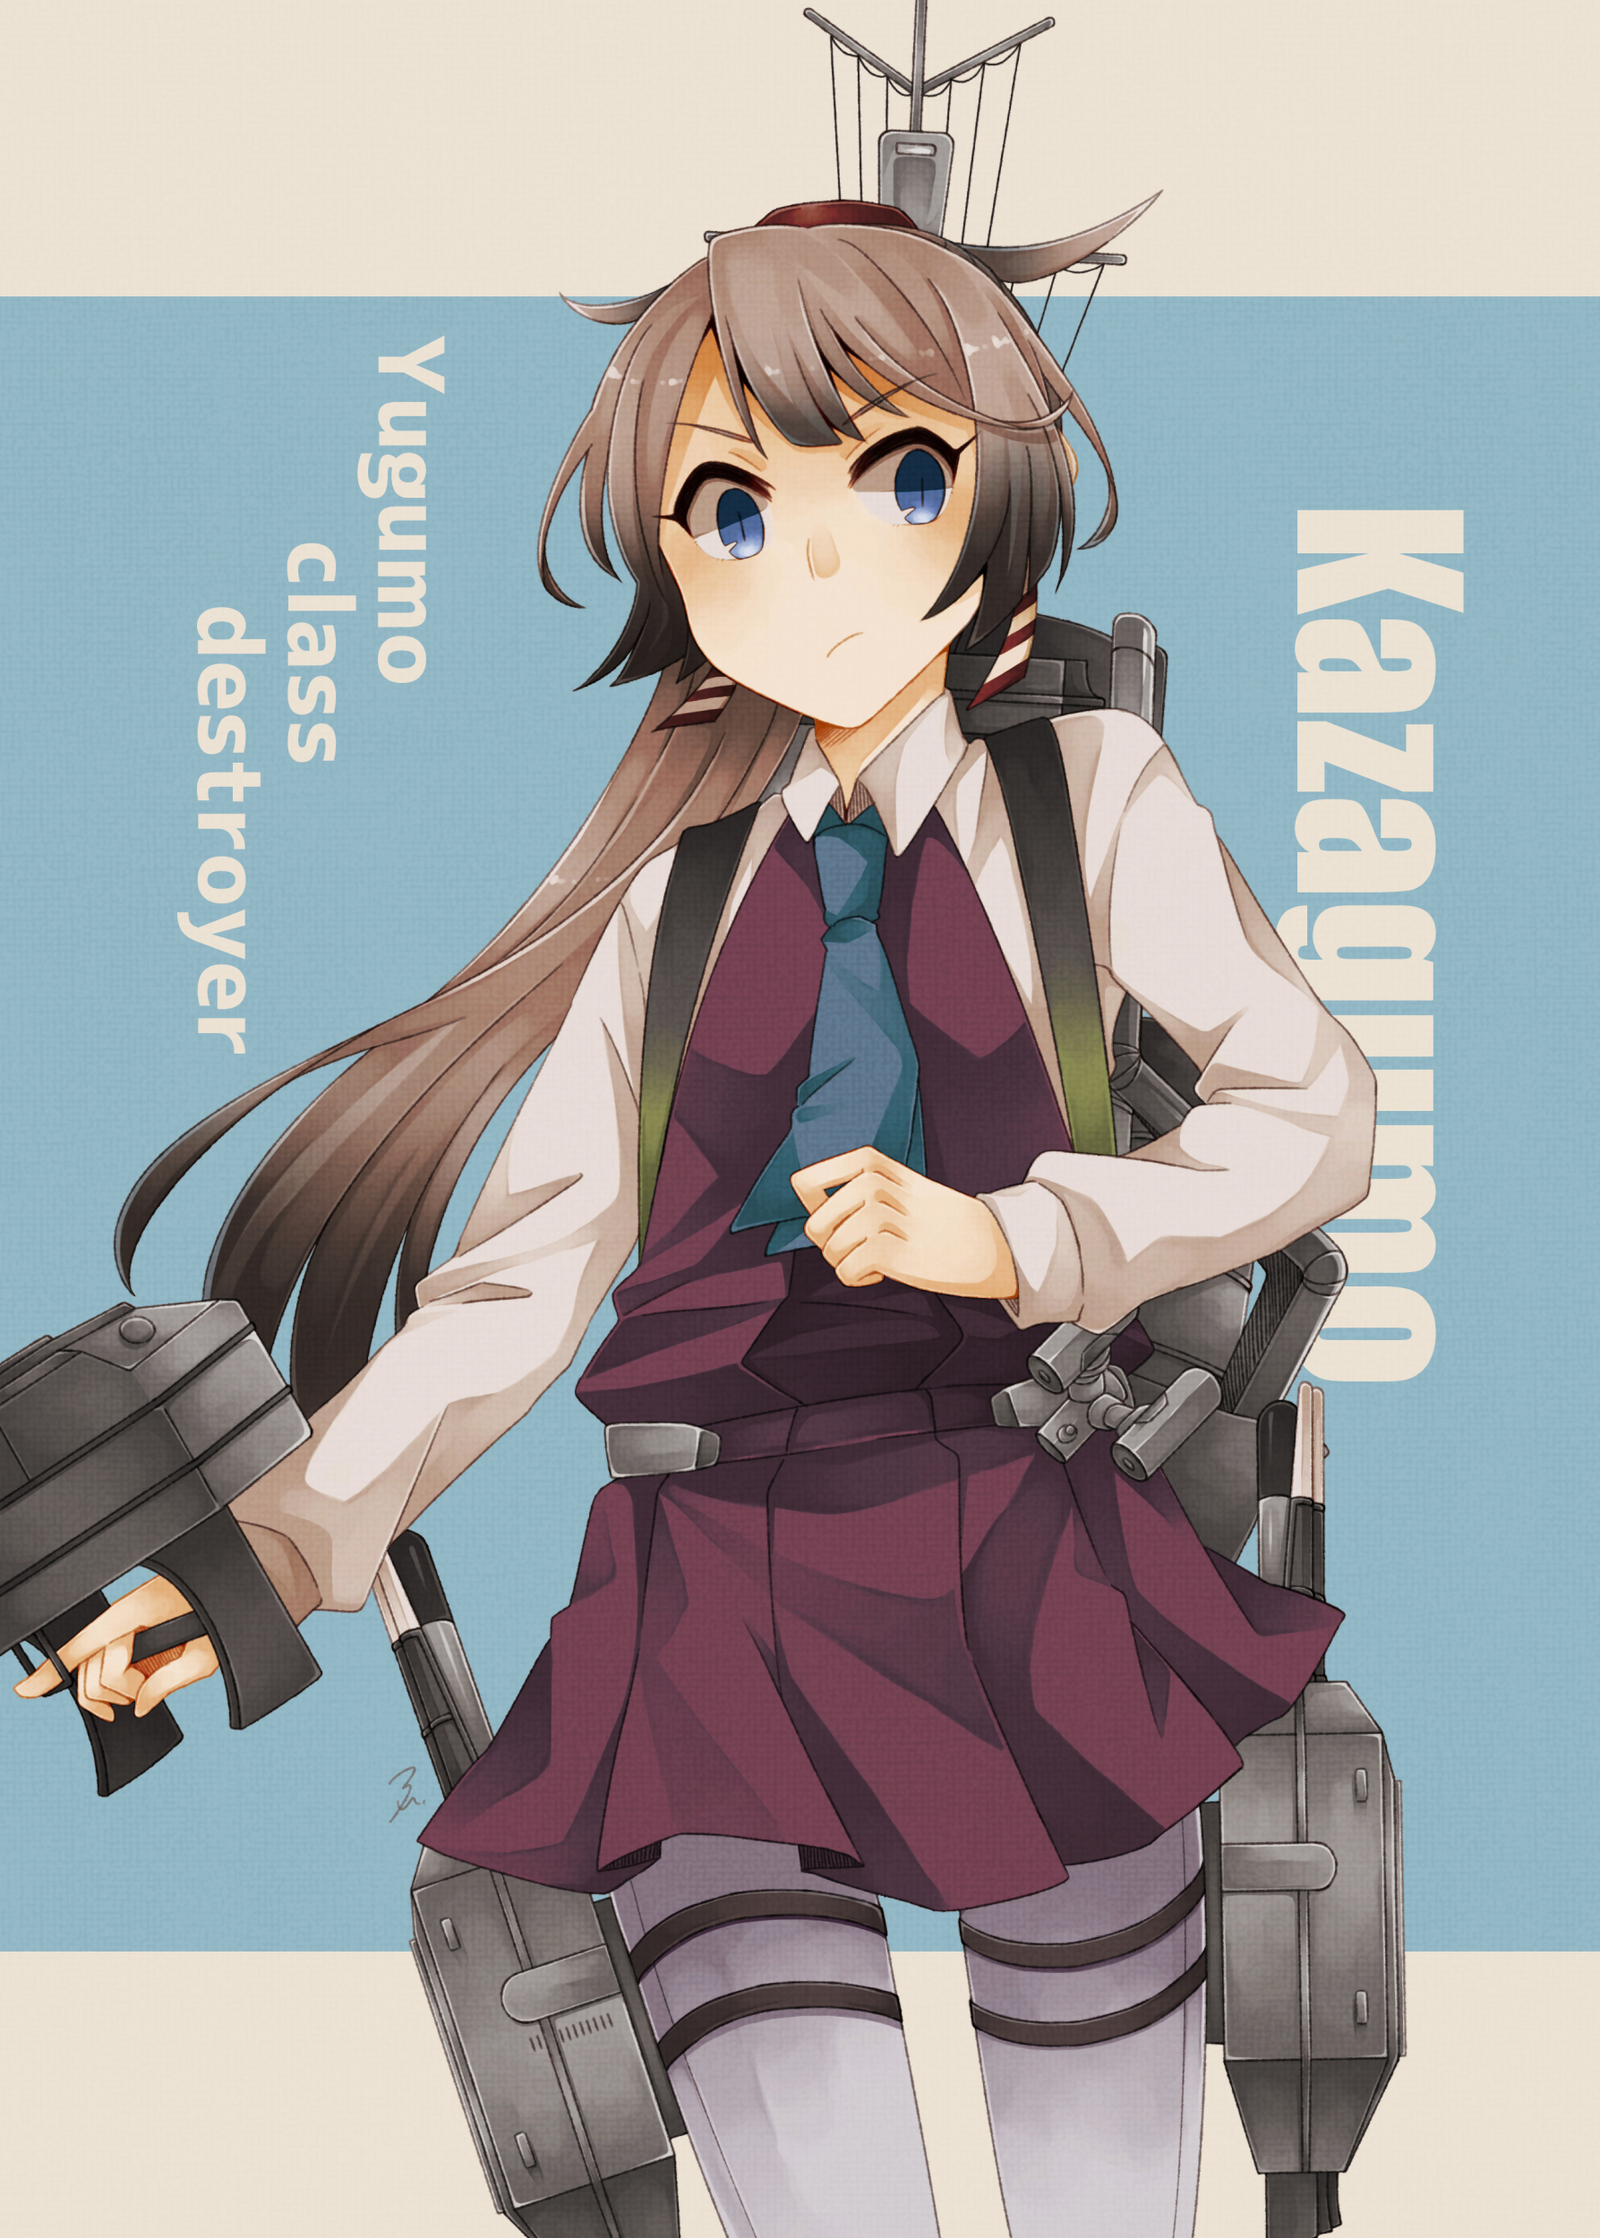 Yugumo class destroyers - Kantai collection, Anime art, Kanmusu, , Makigumo, Kazagumo, Akigumo, Longpost